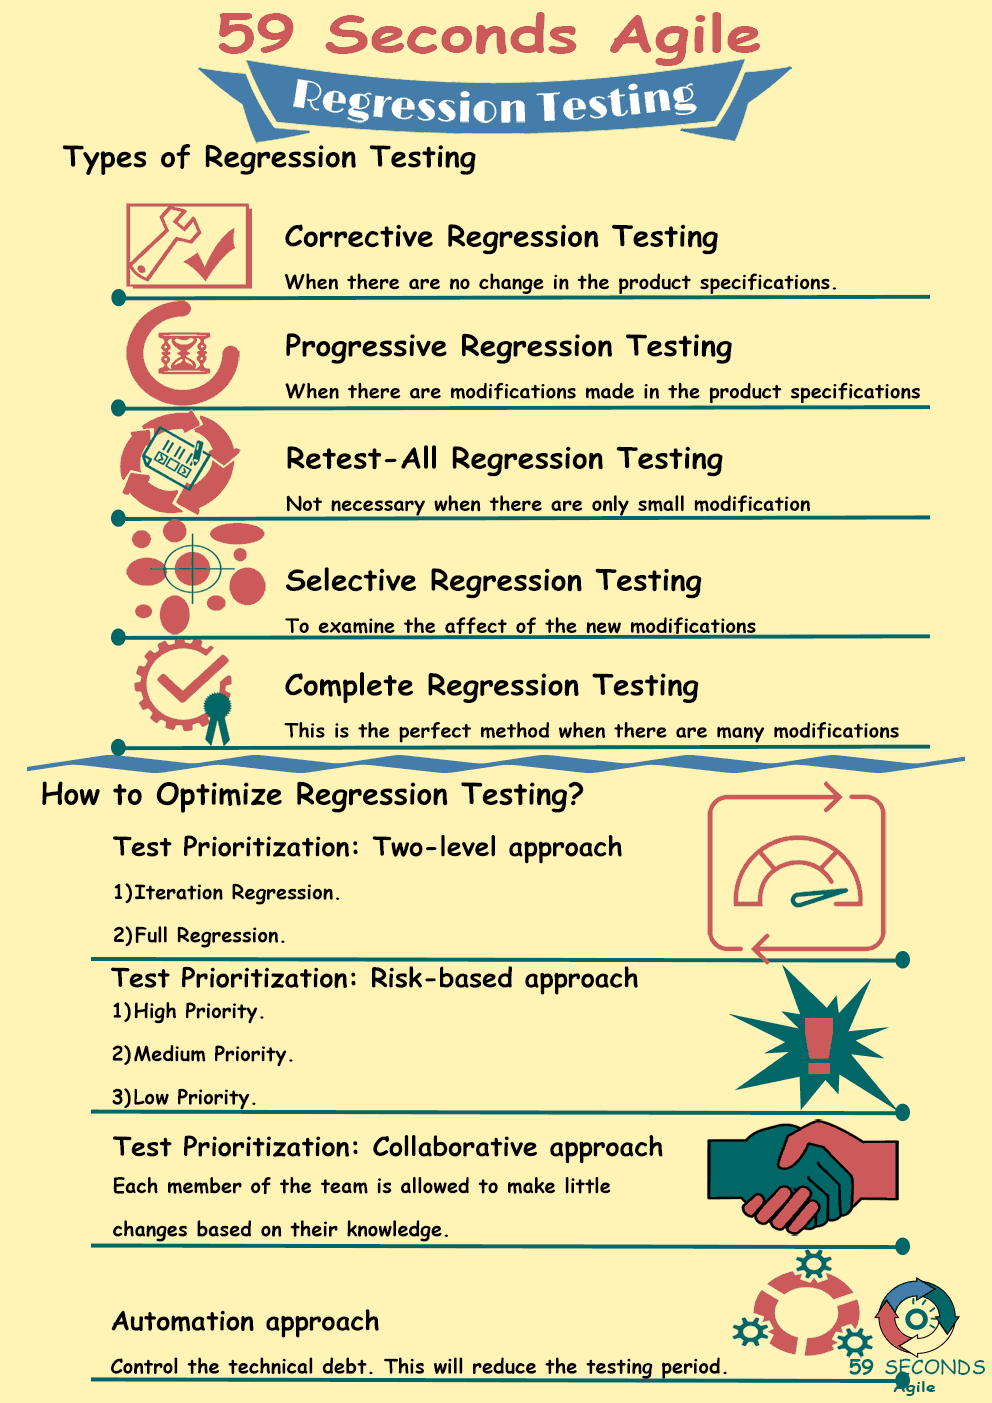 59 Seconds Agile - Regression Testing